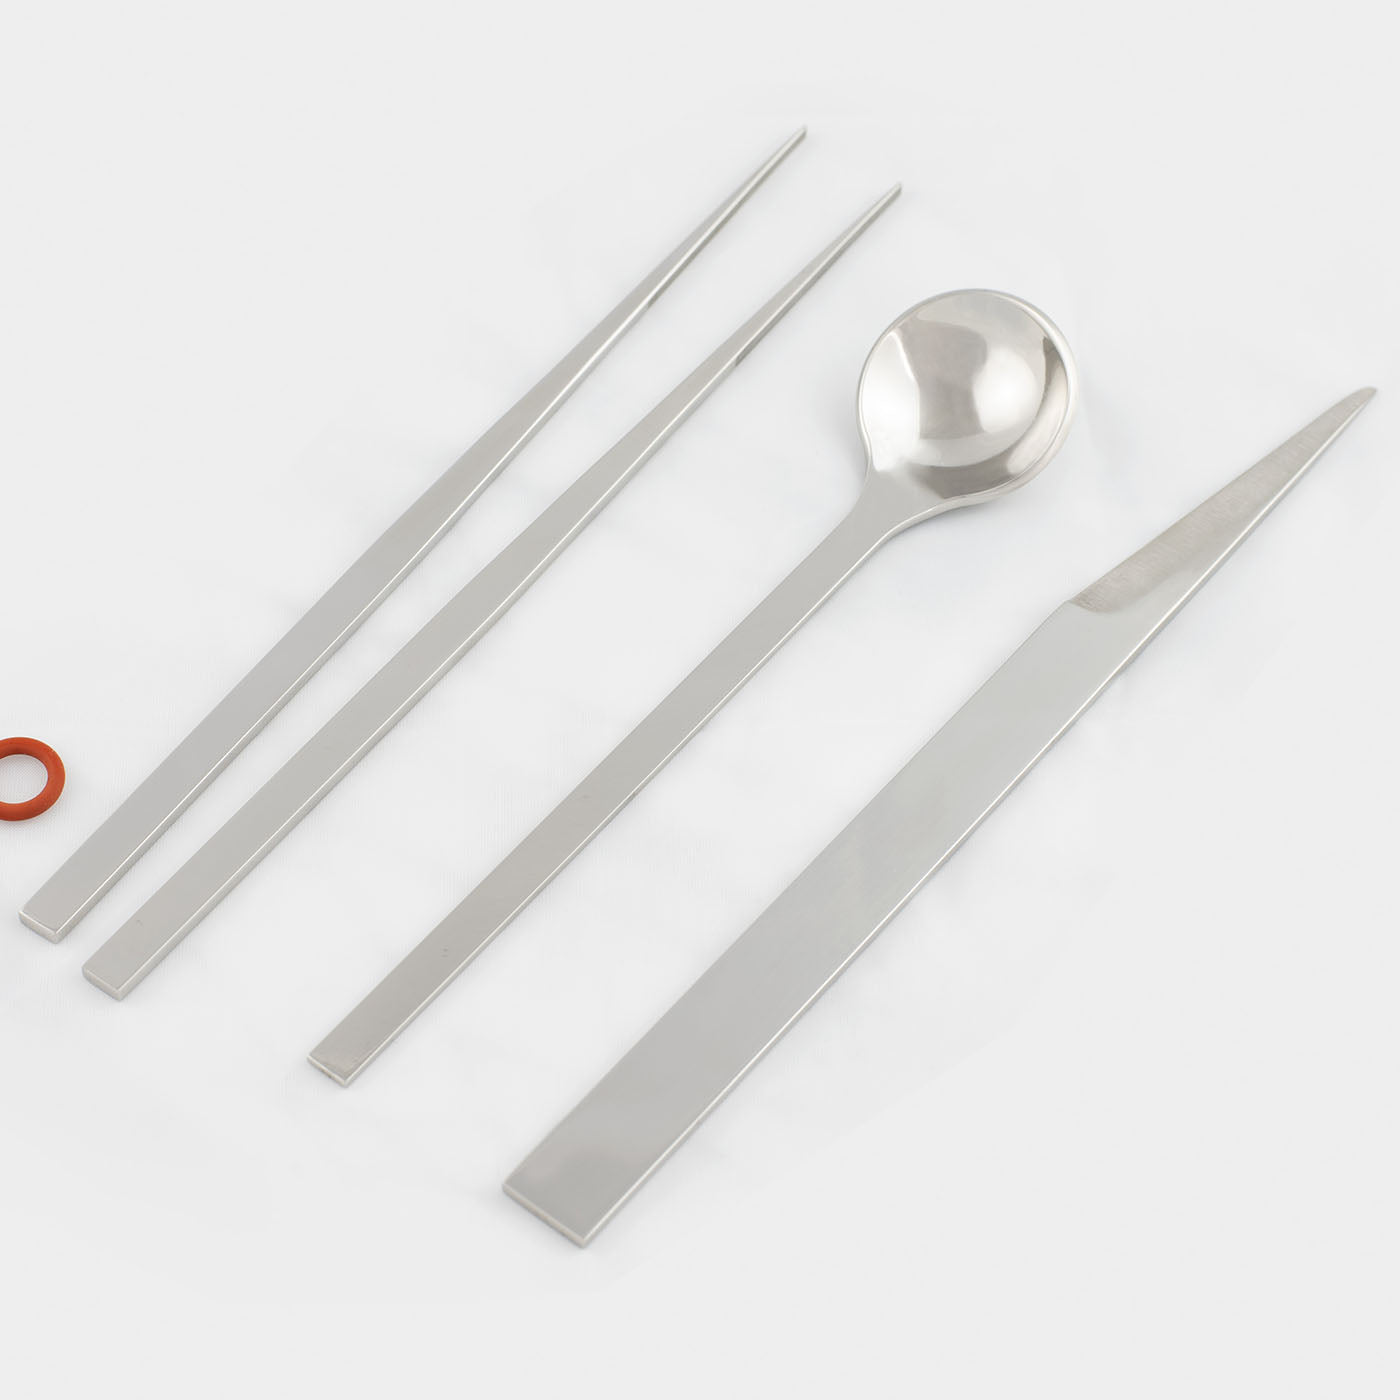 Sapio 3-Piece Cutlery Set - Alternative view 4